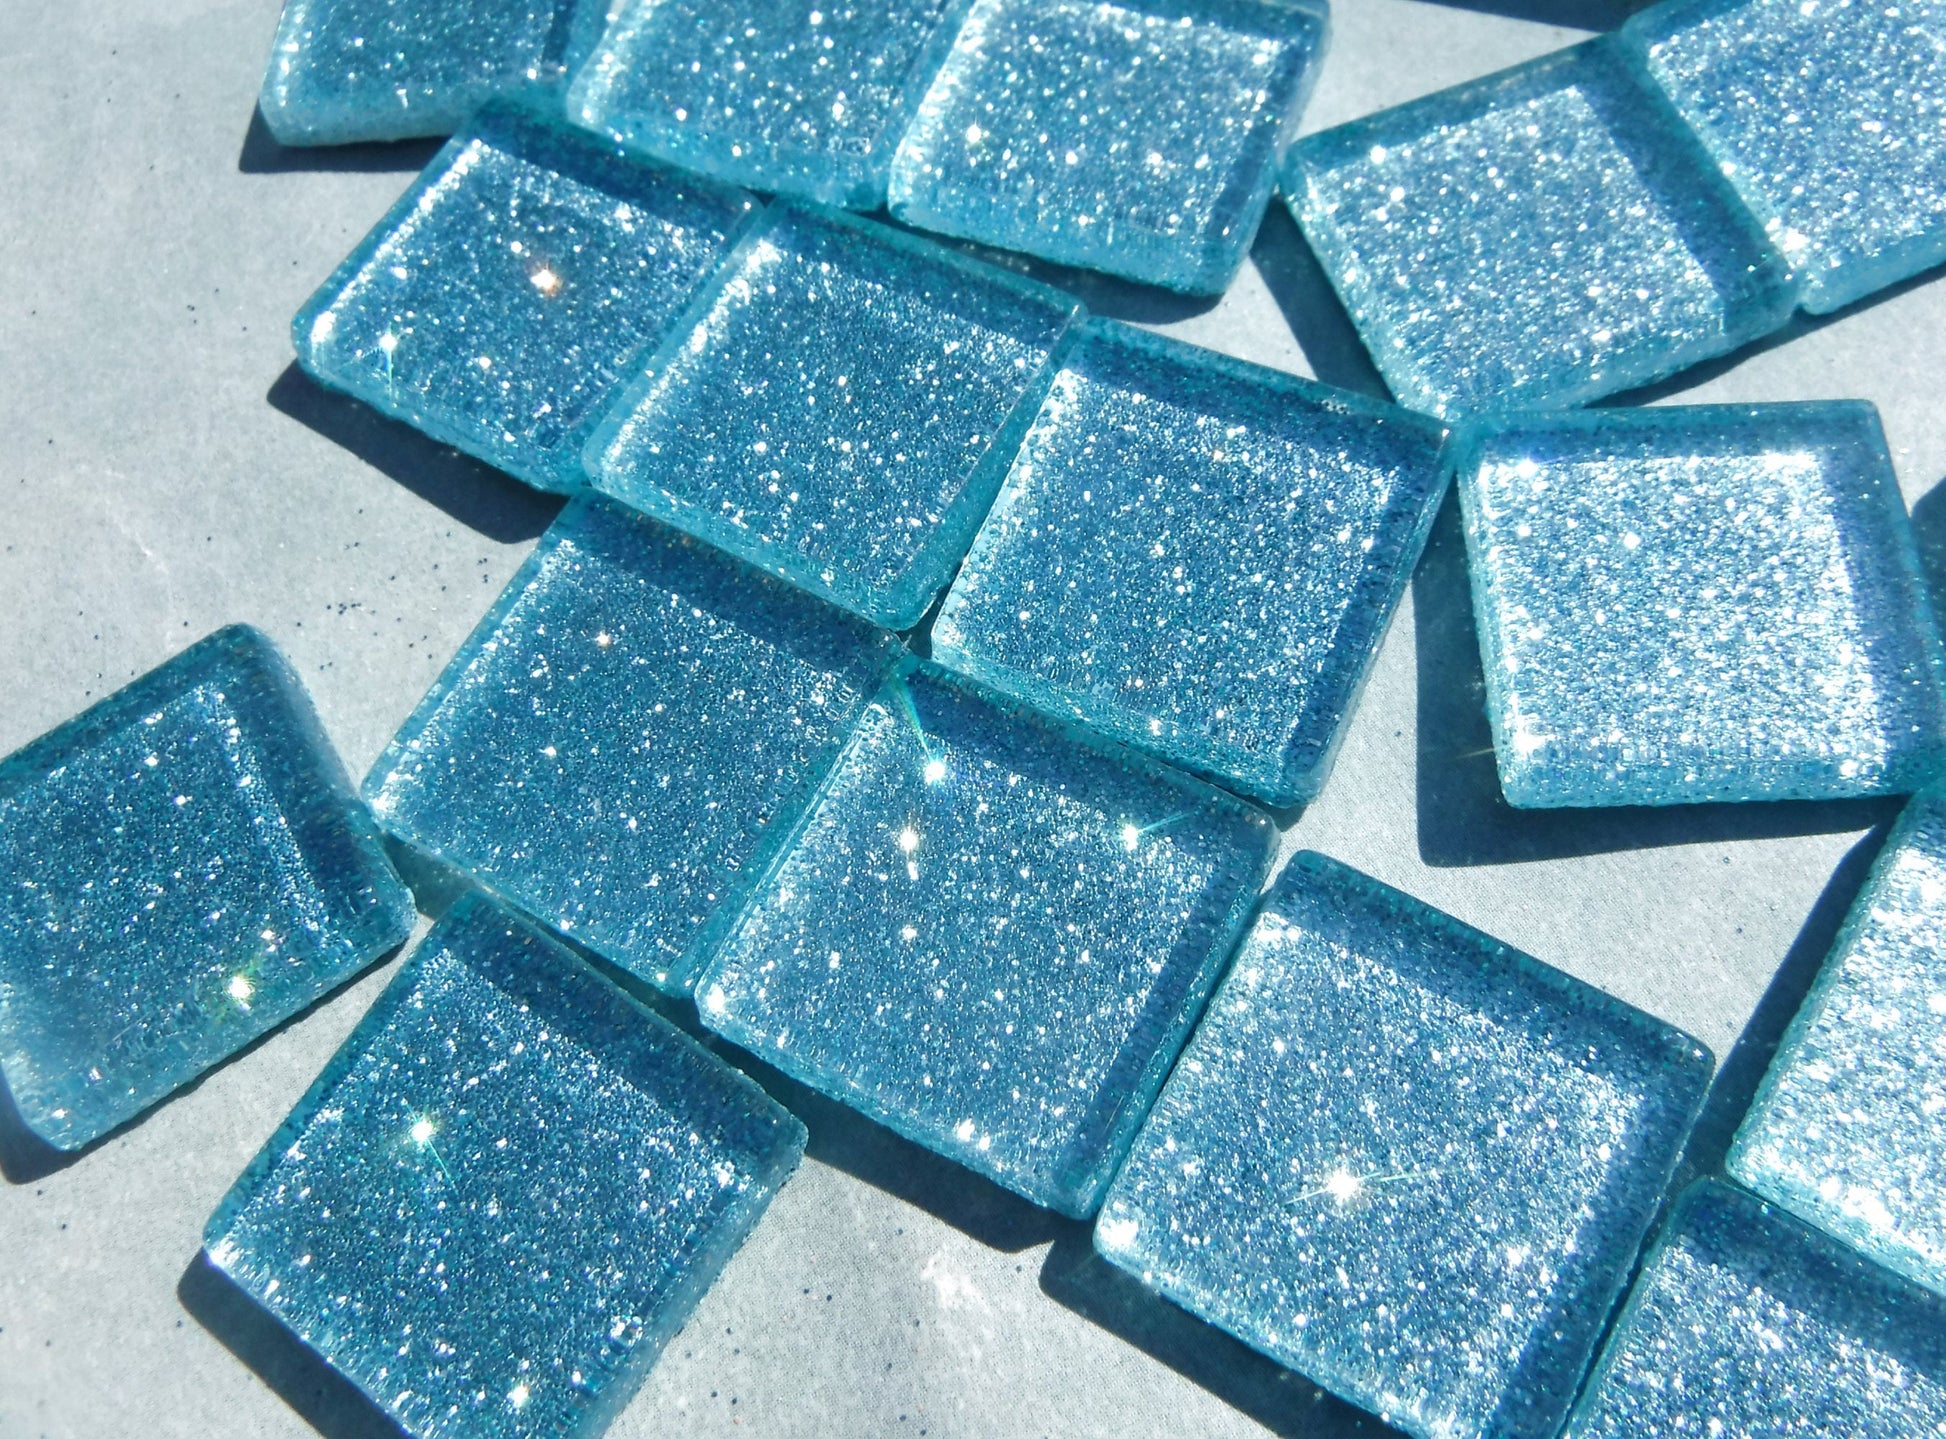 Raindrop Blue Glitter Tiles - 20mm Mosaic Tiles - 25 Metallic Glass Tiles in Light Blue